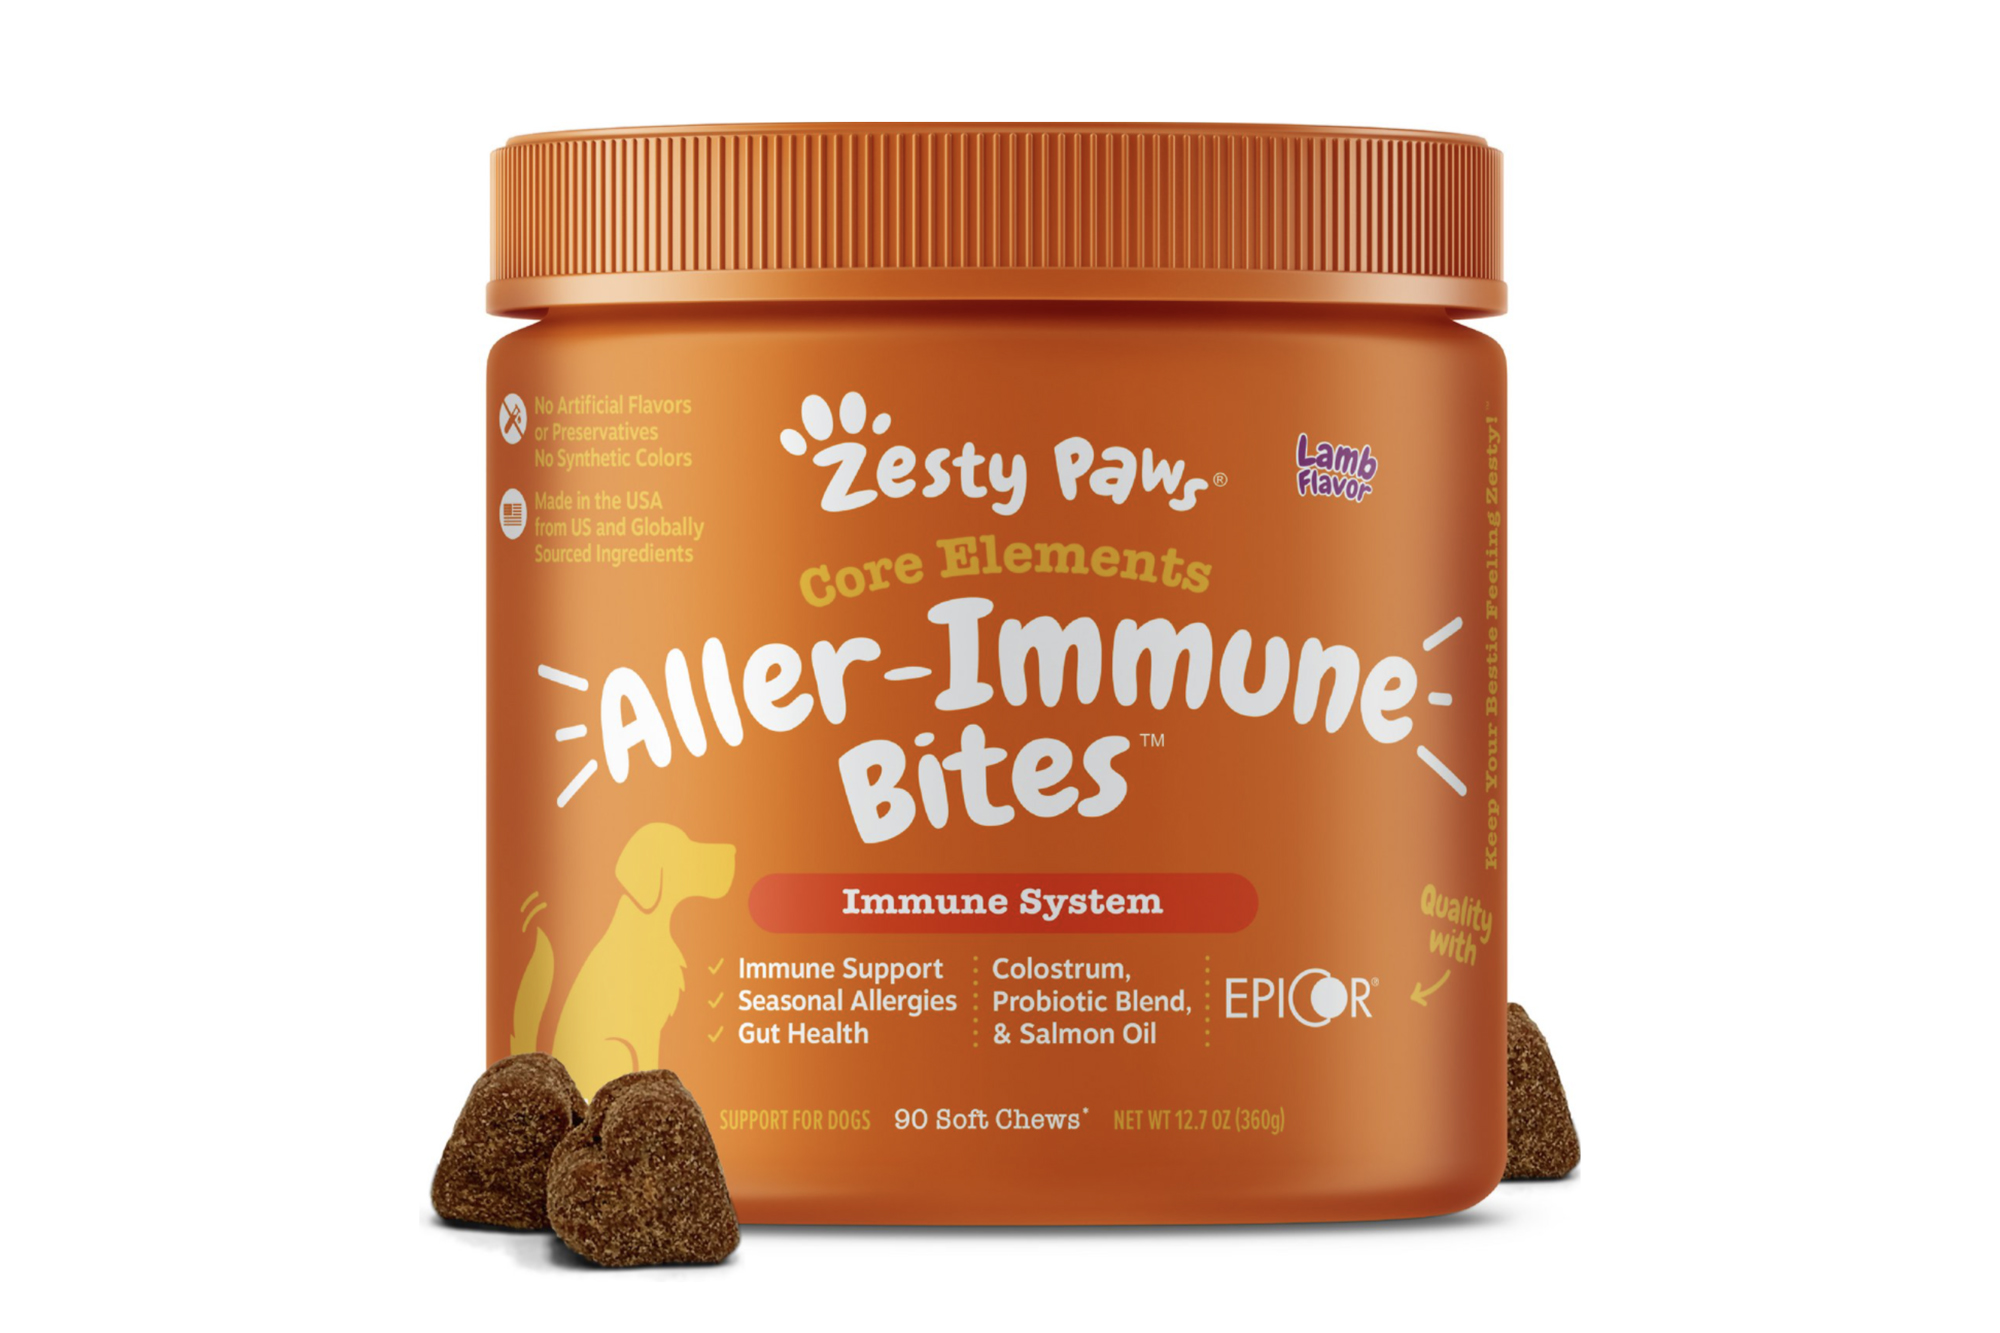 Zesty Paws Aller-Immune Lamb Flavored Soft Chews Allergy & Immune Supplement for Dogs